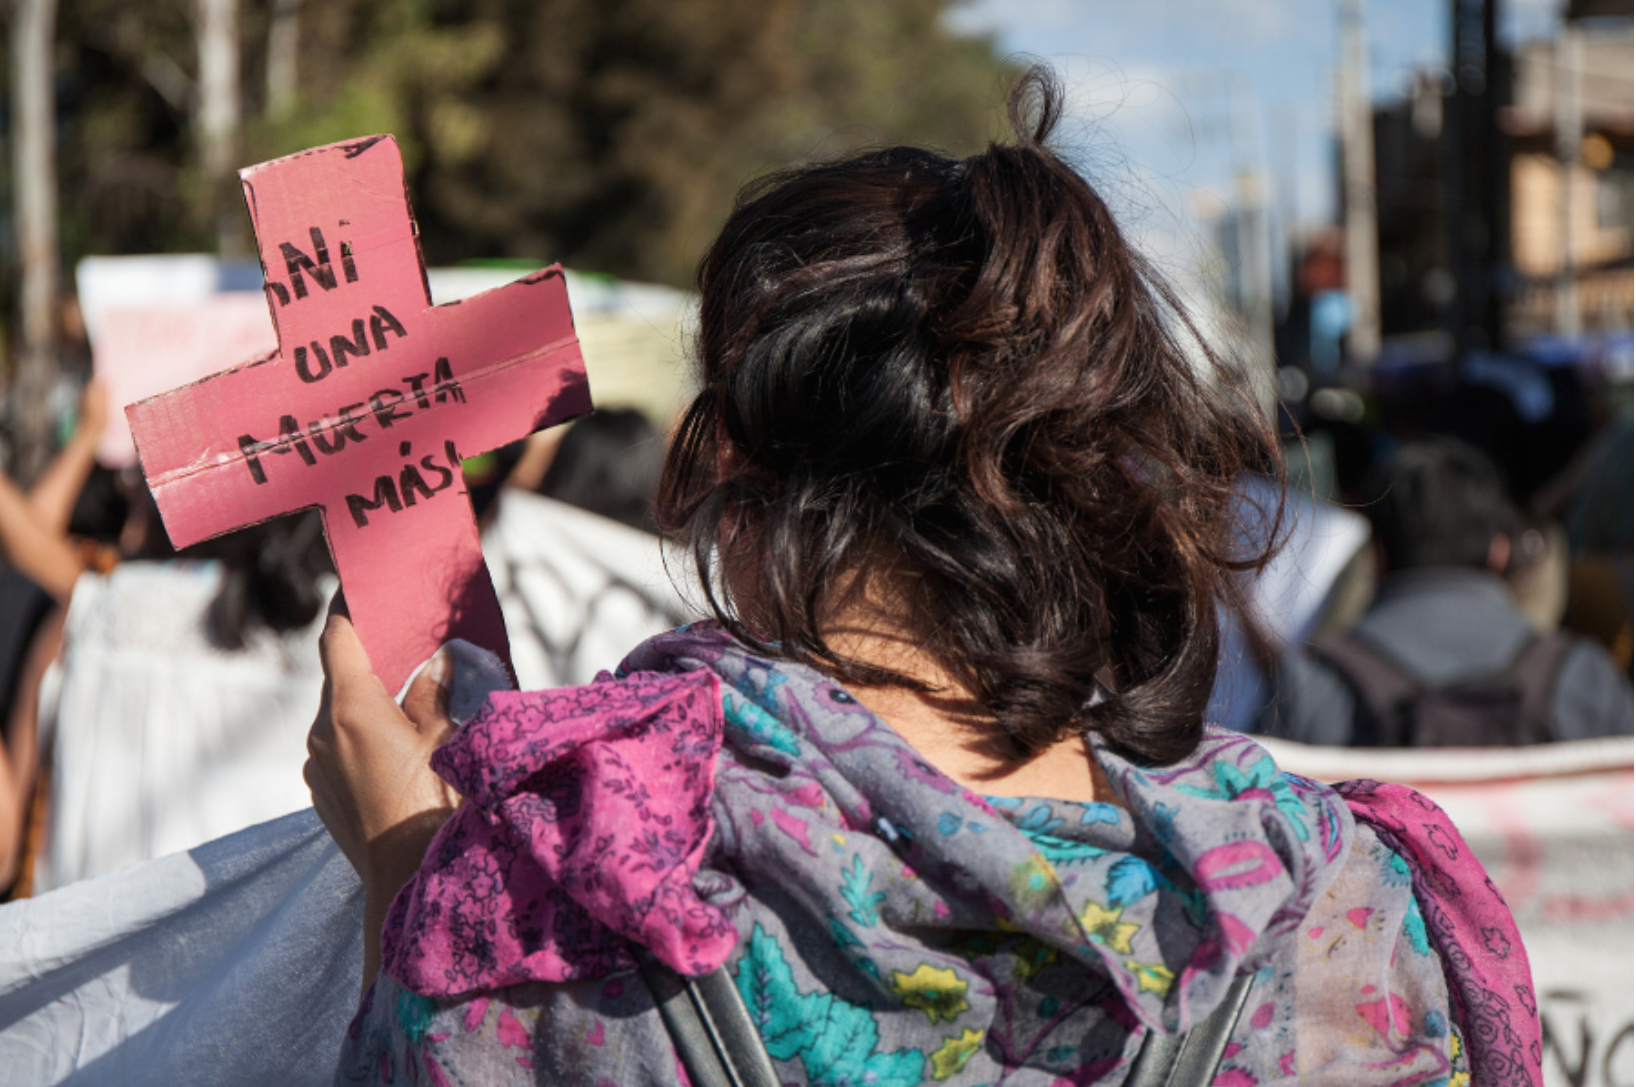  En Tamaulipas aprueban pena de 50 años a feminicidas